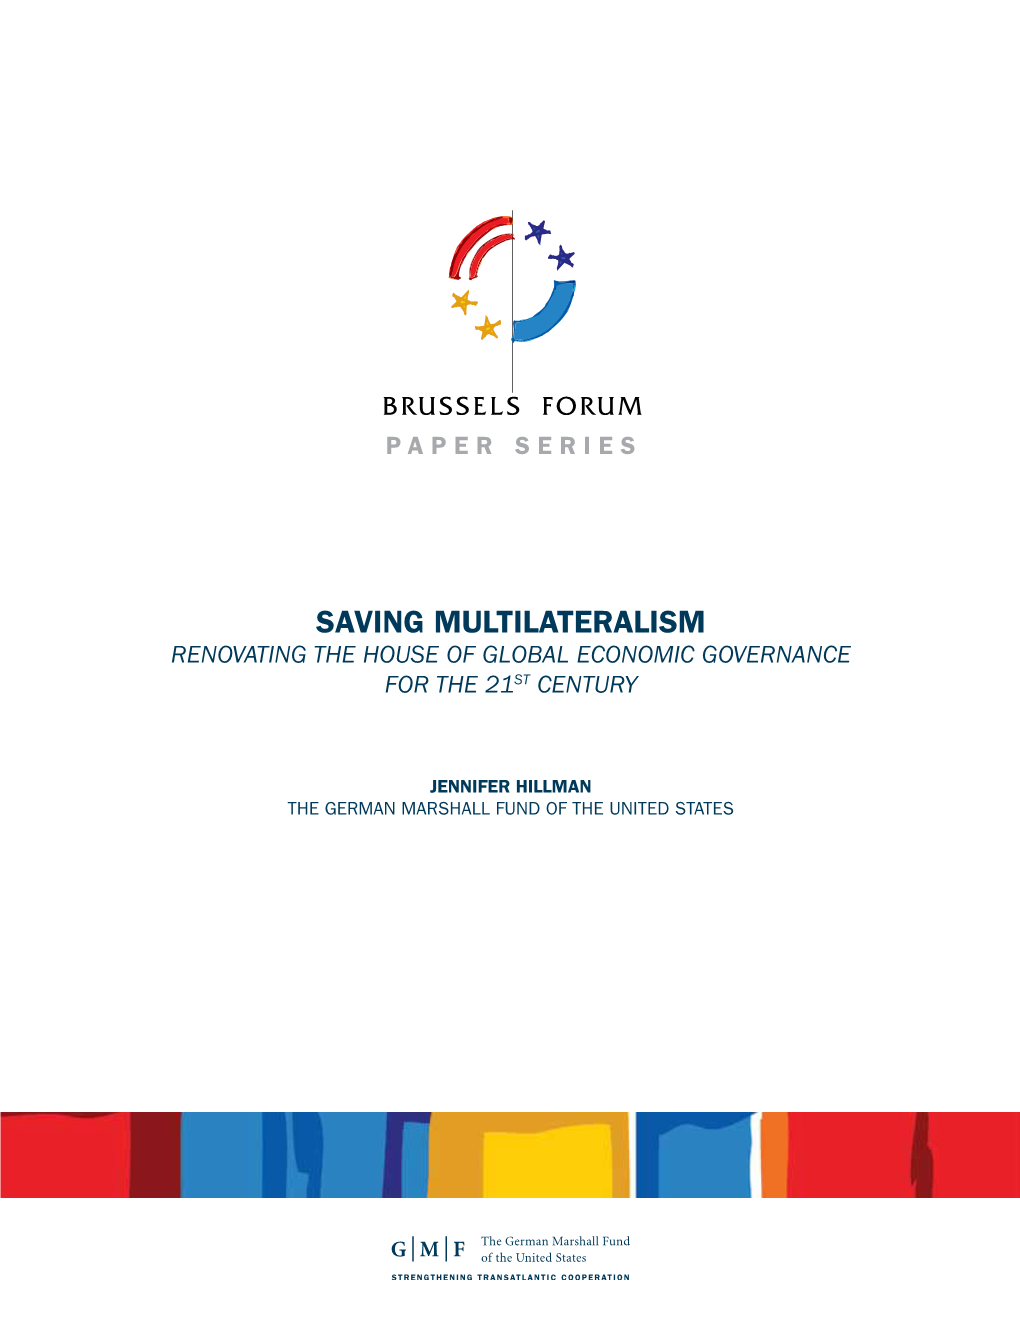 Saving Multilateralism: Renovating the House of Global Economic